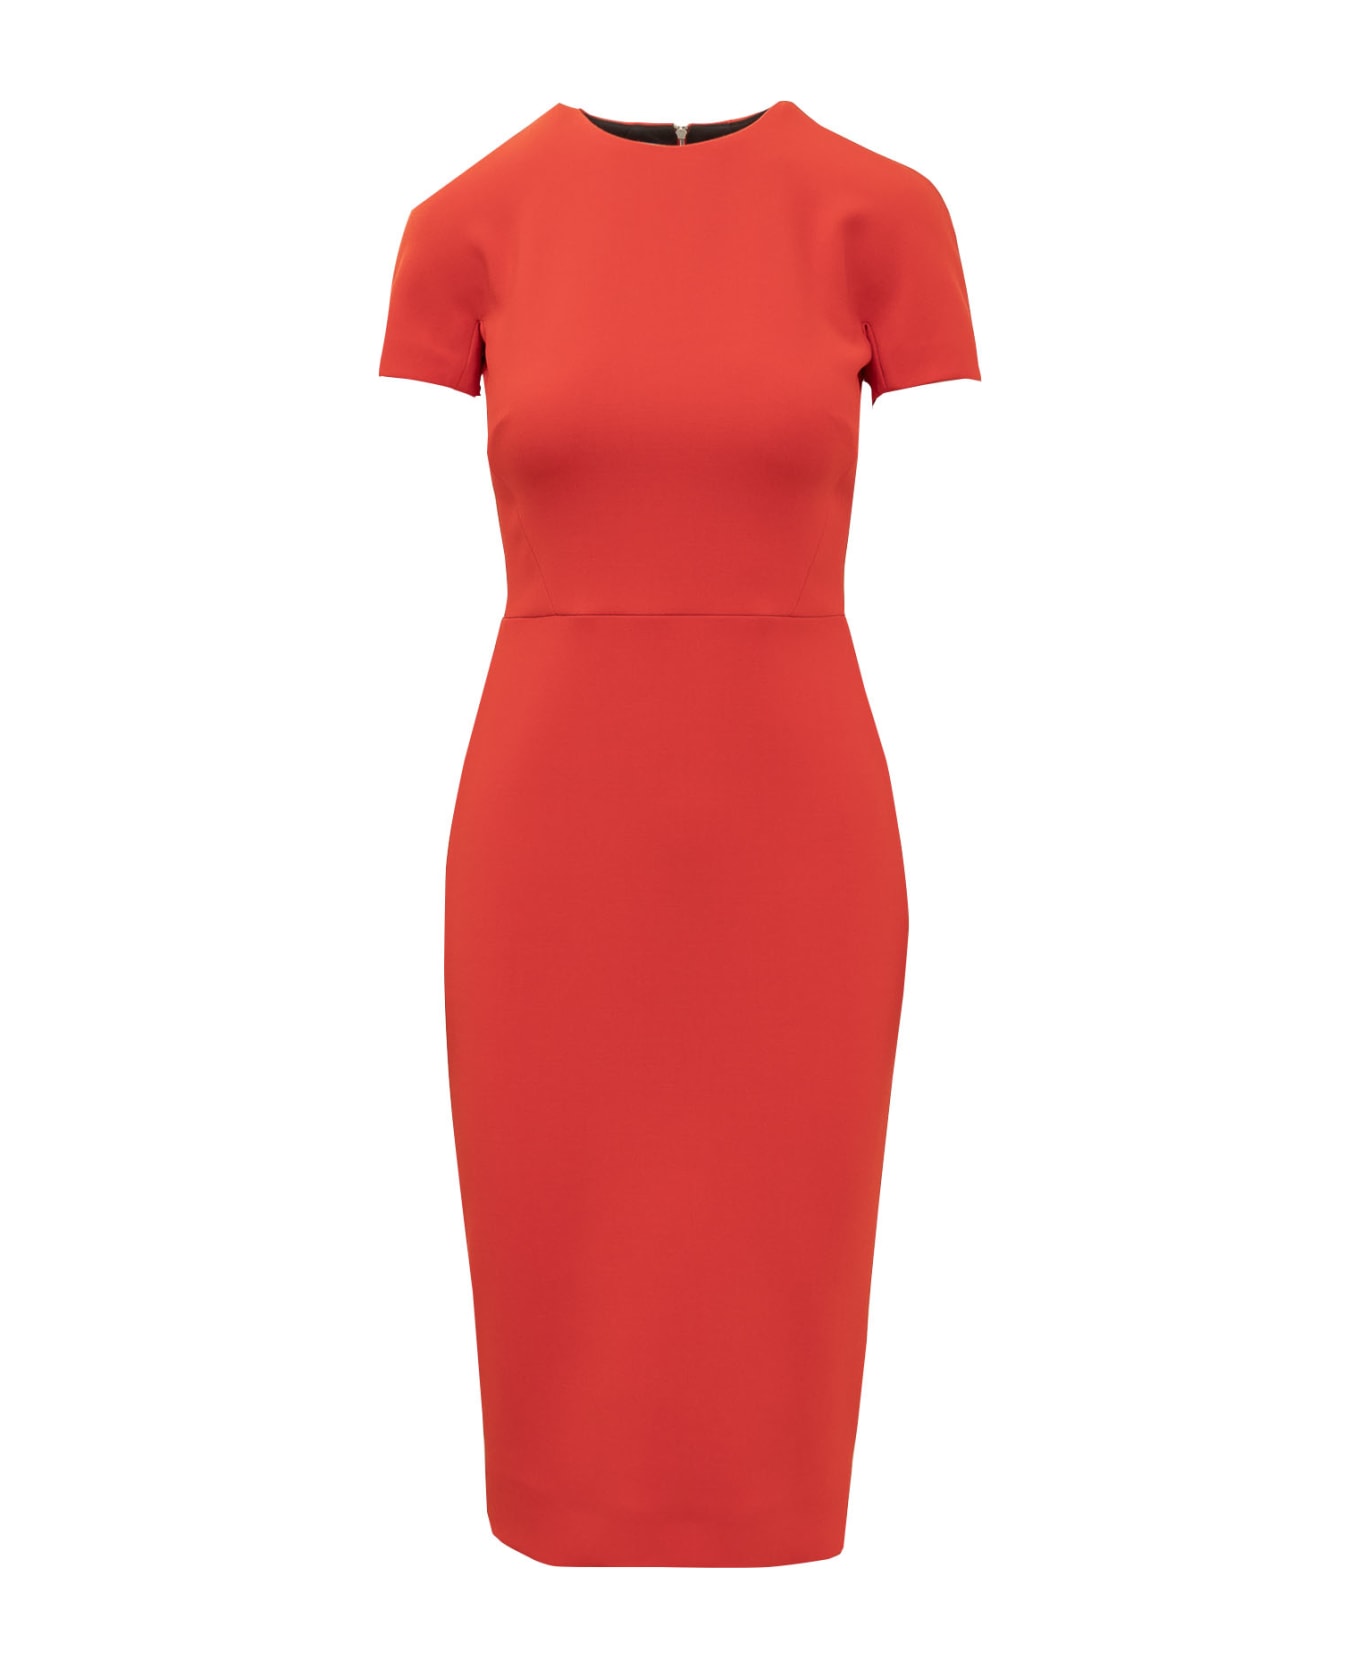 Victoria Beckham Dress - BRIGHT RED